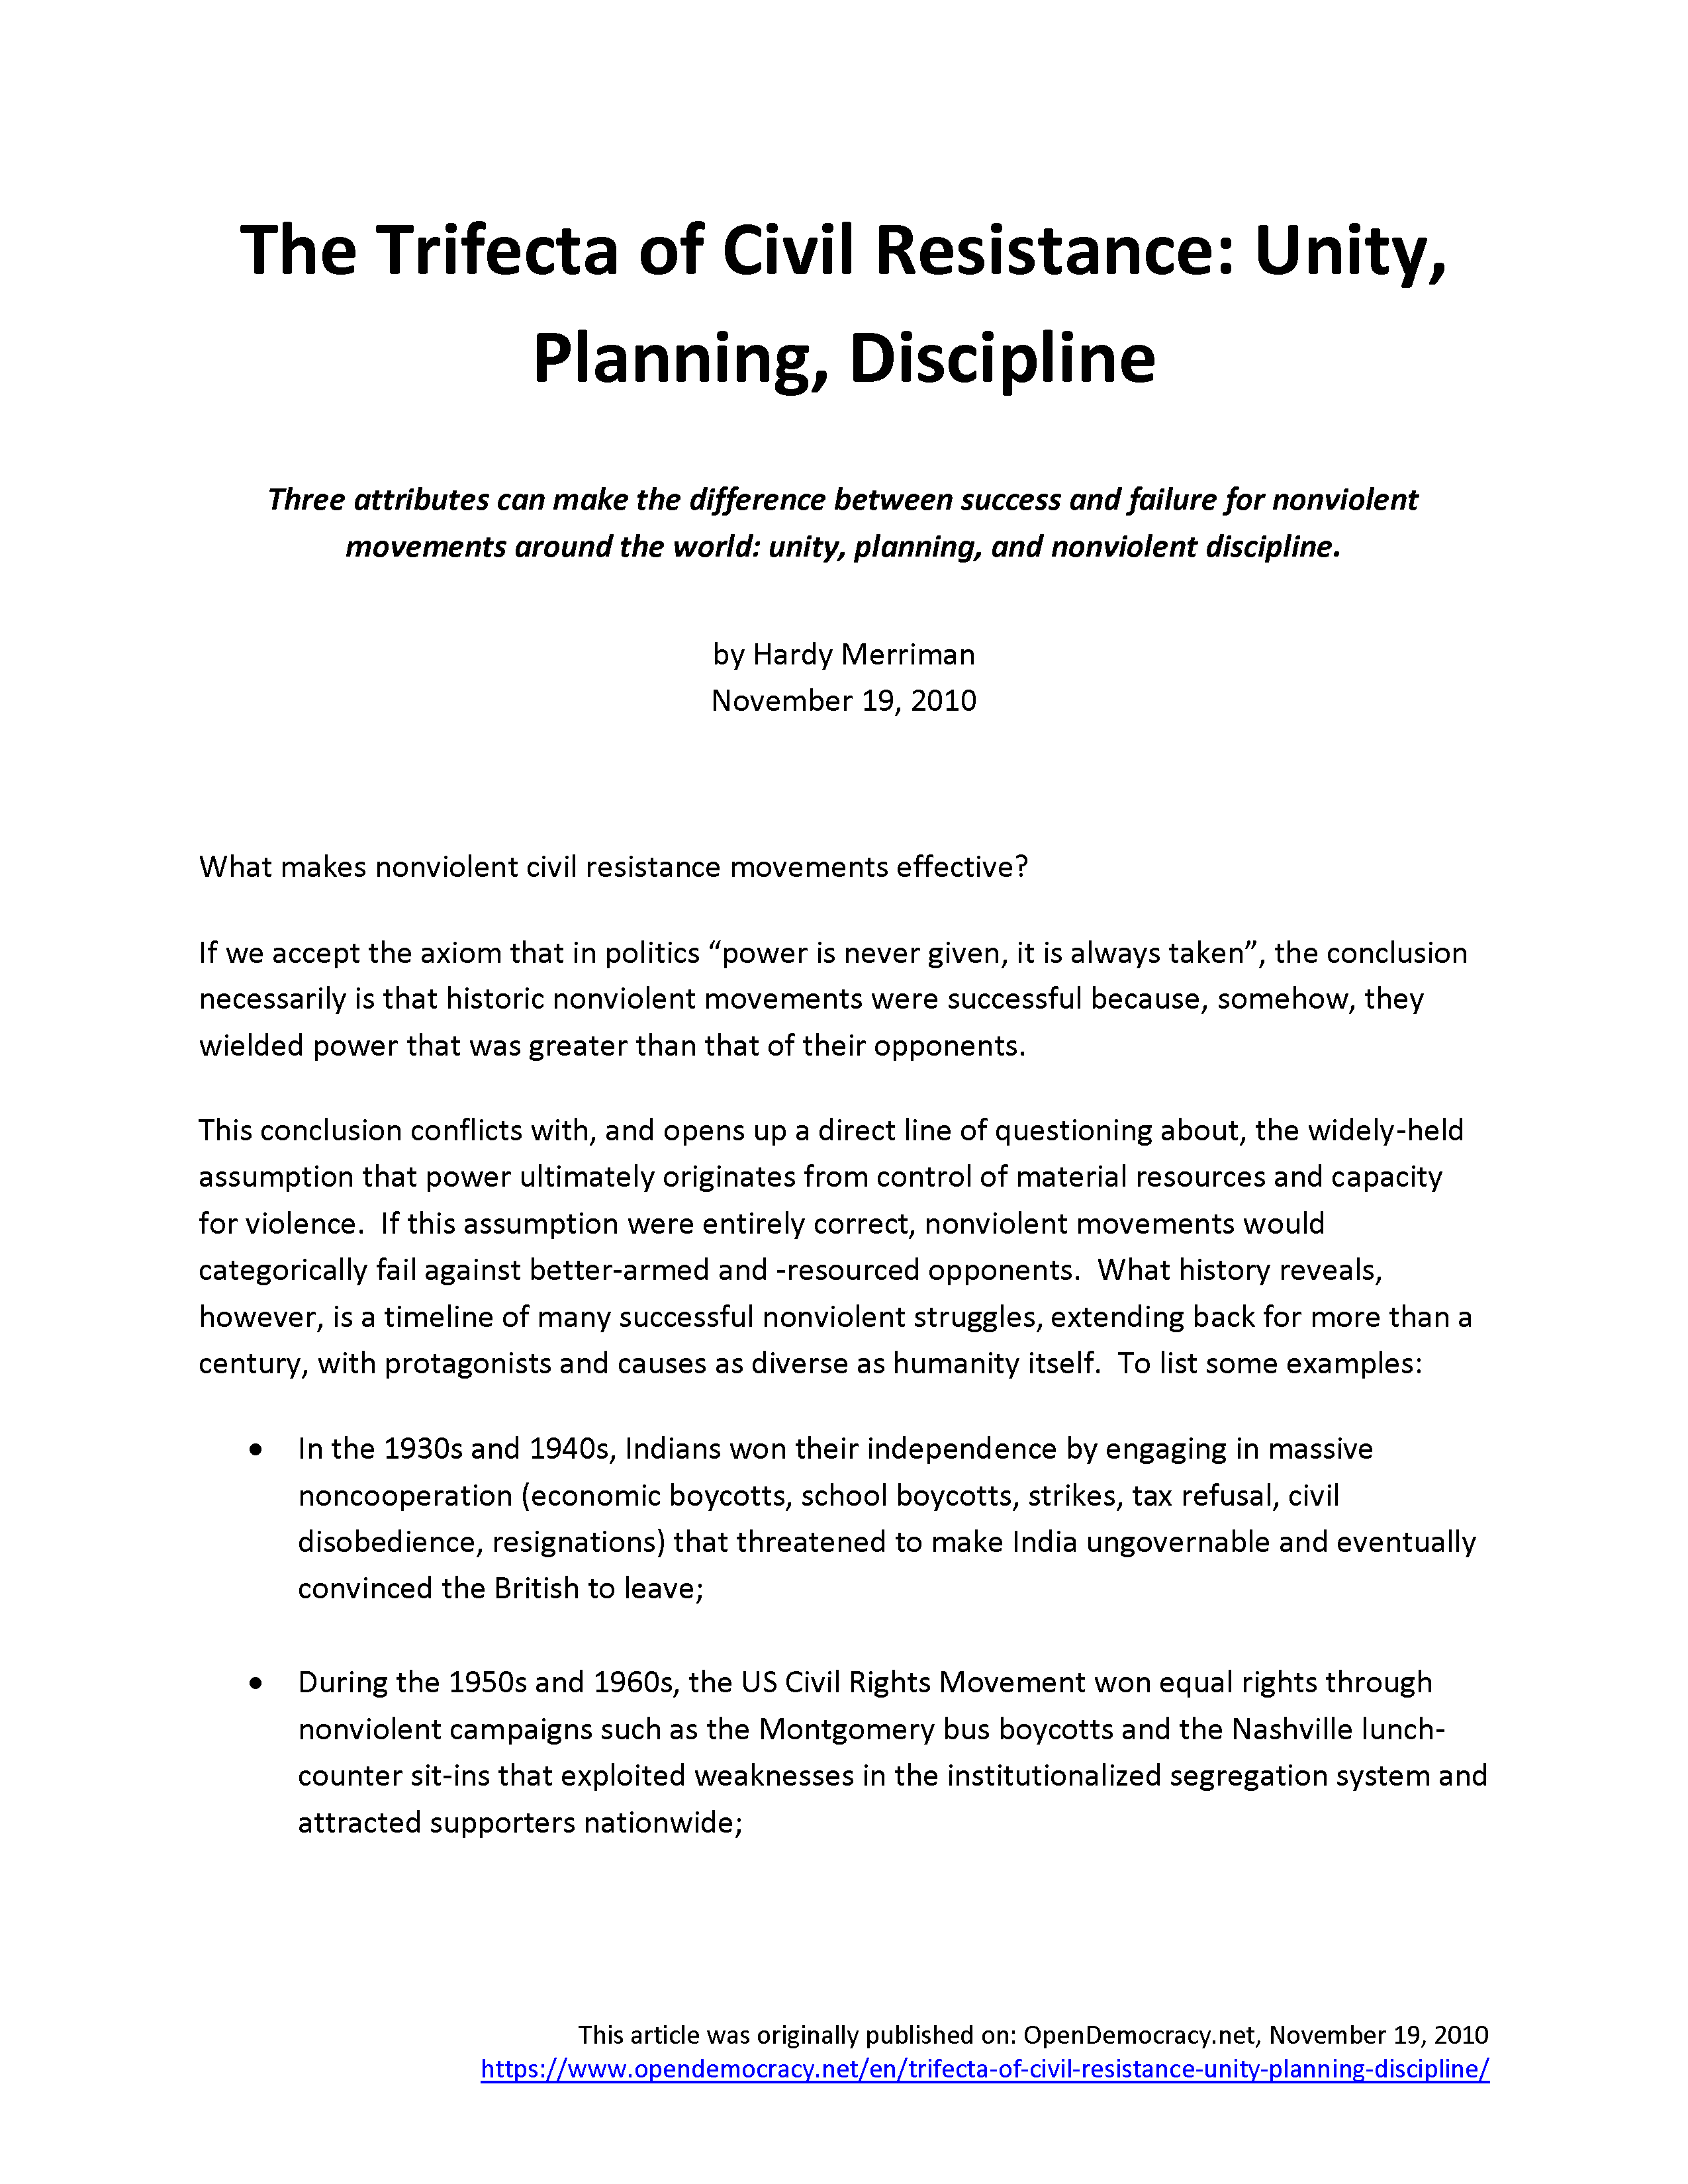 The Trifecta of Civil Resistance: Unity, Planning, Discipline